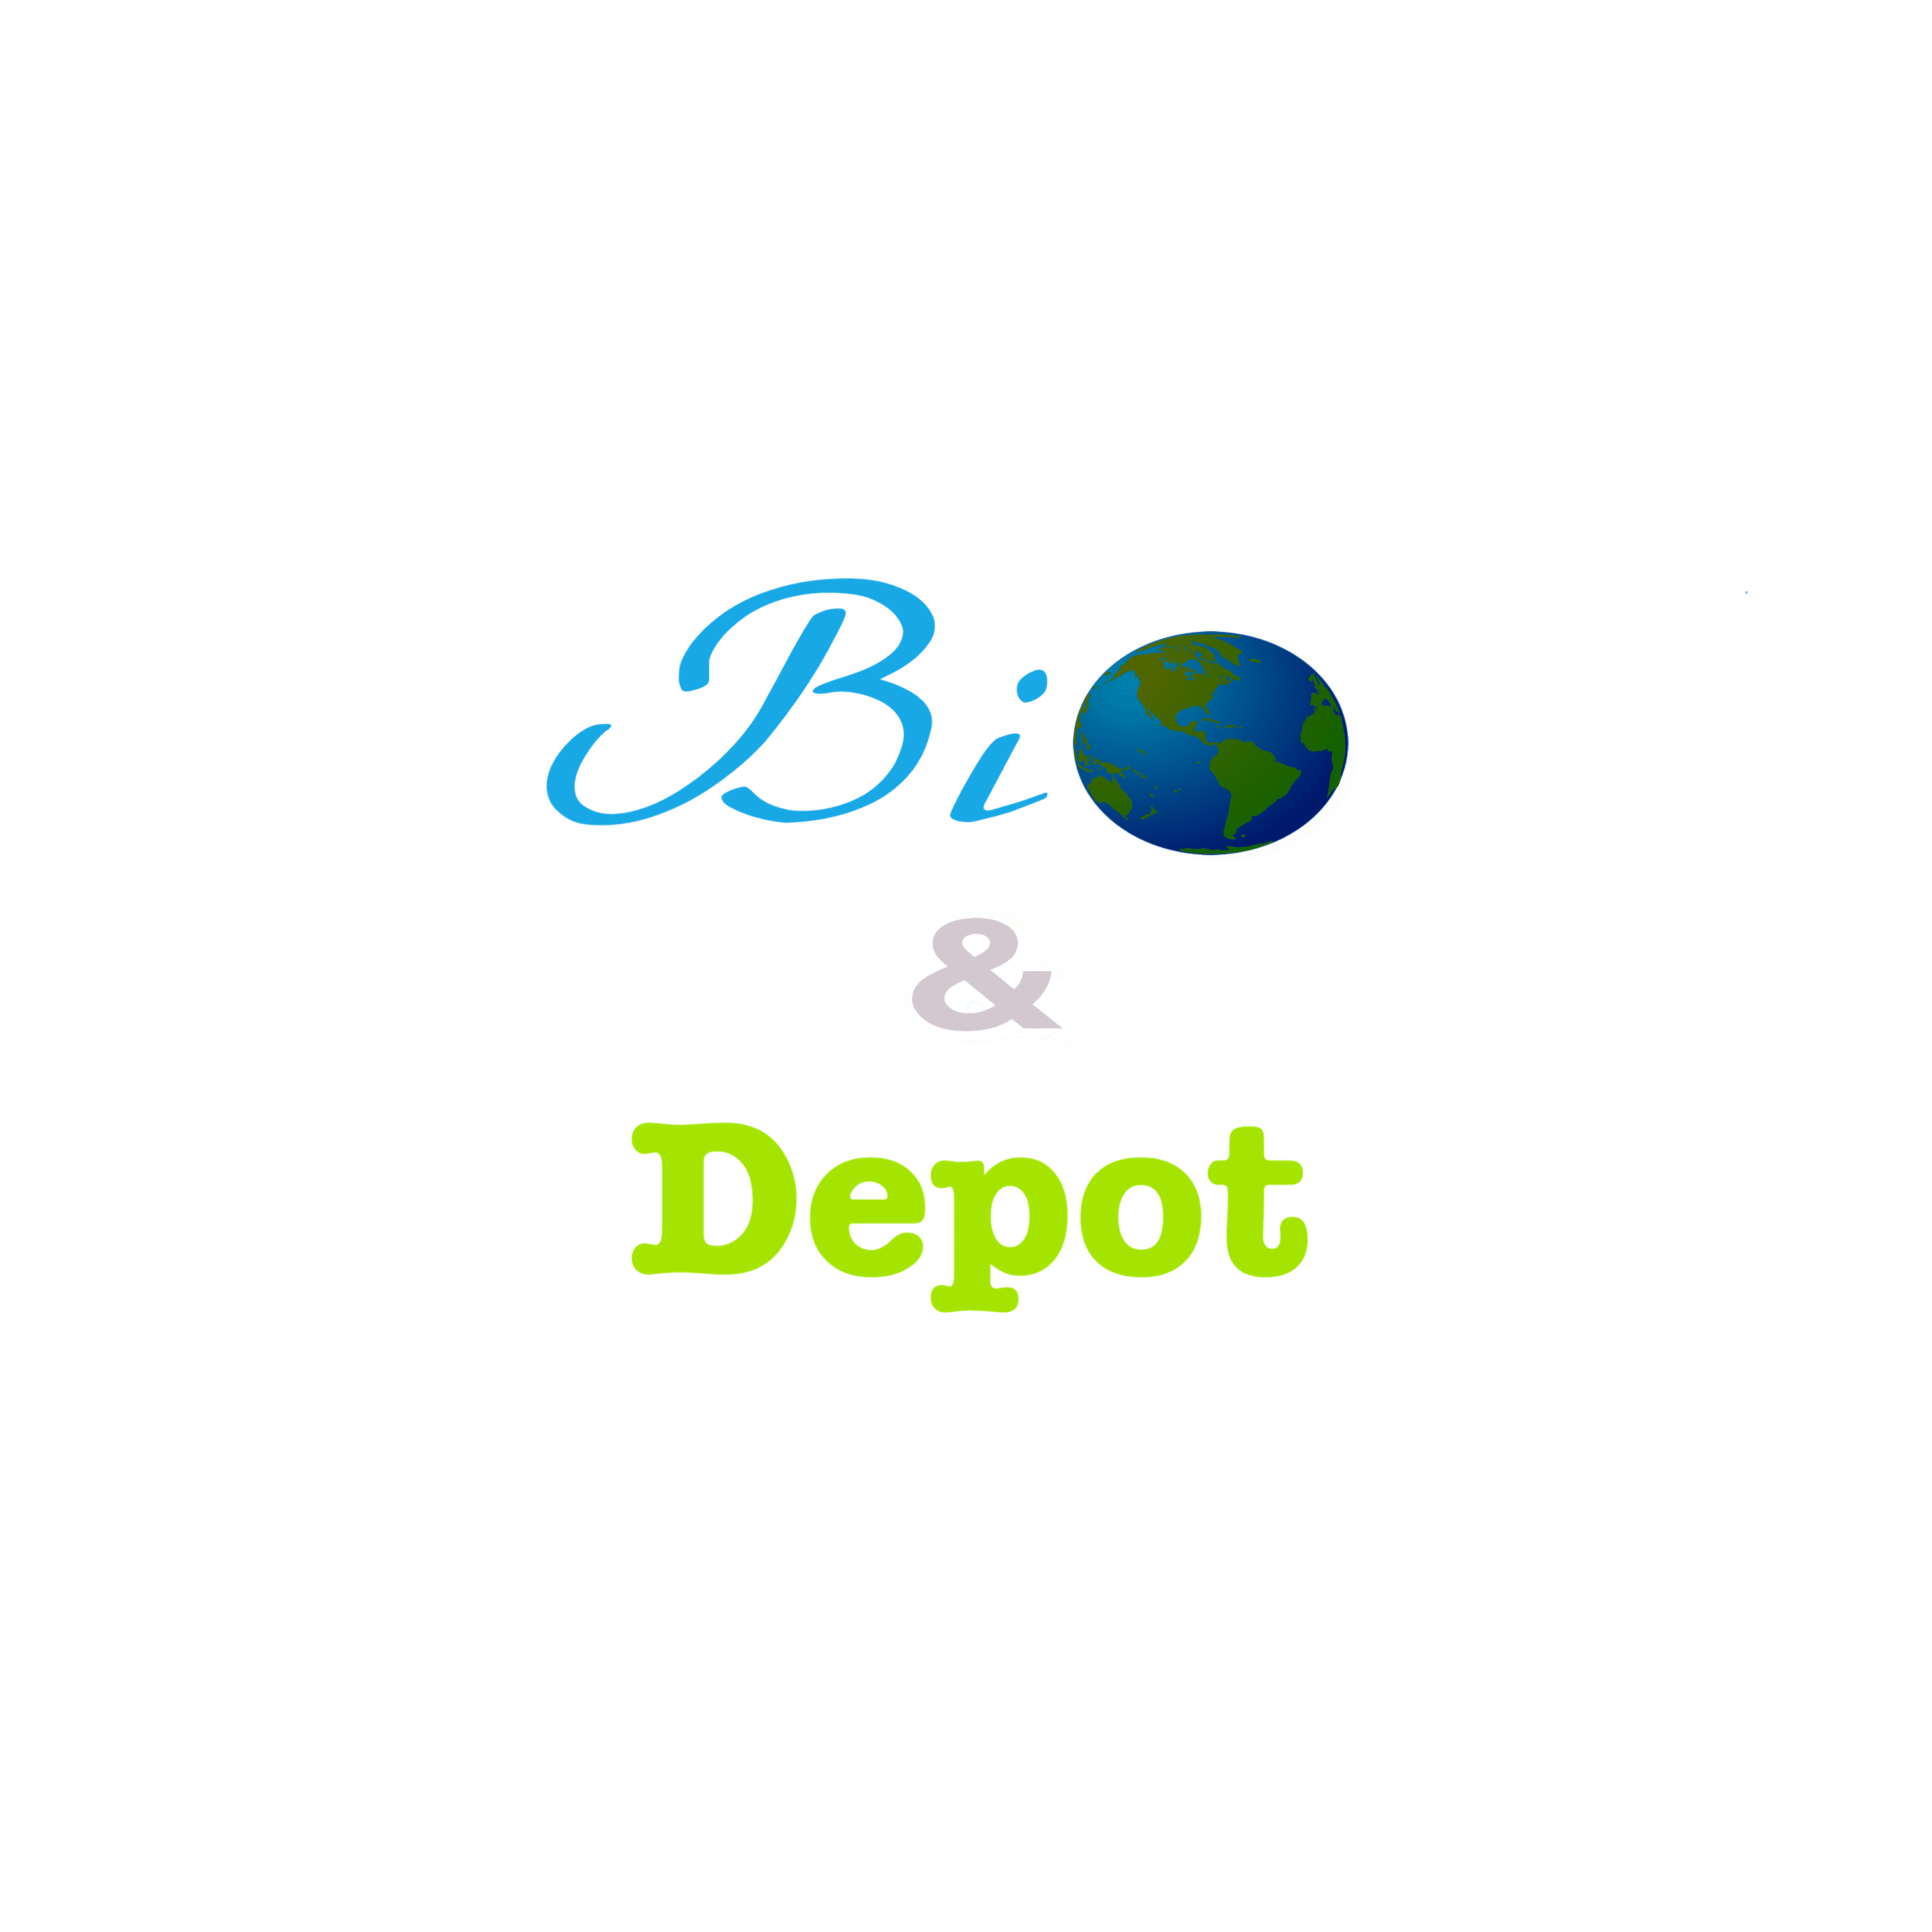 Bio & Depot